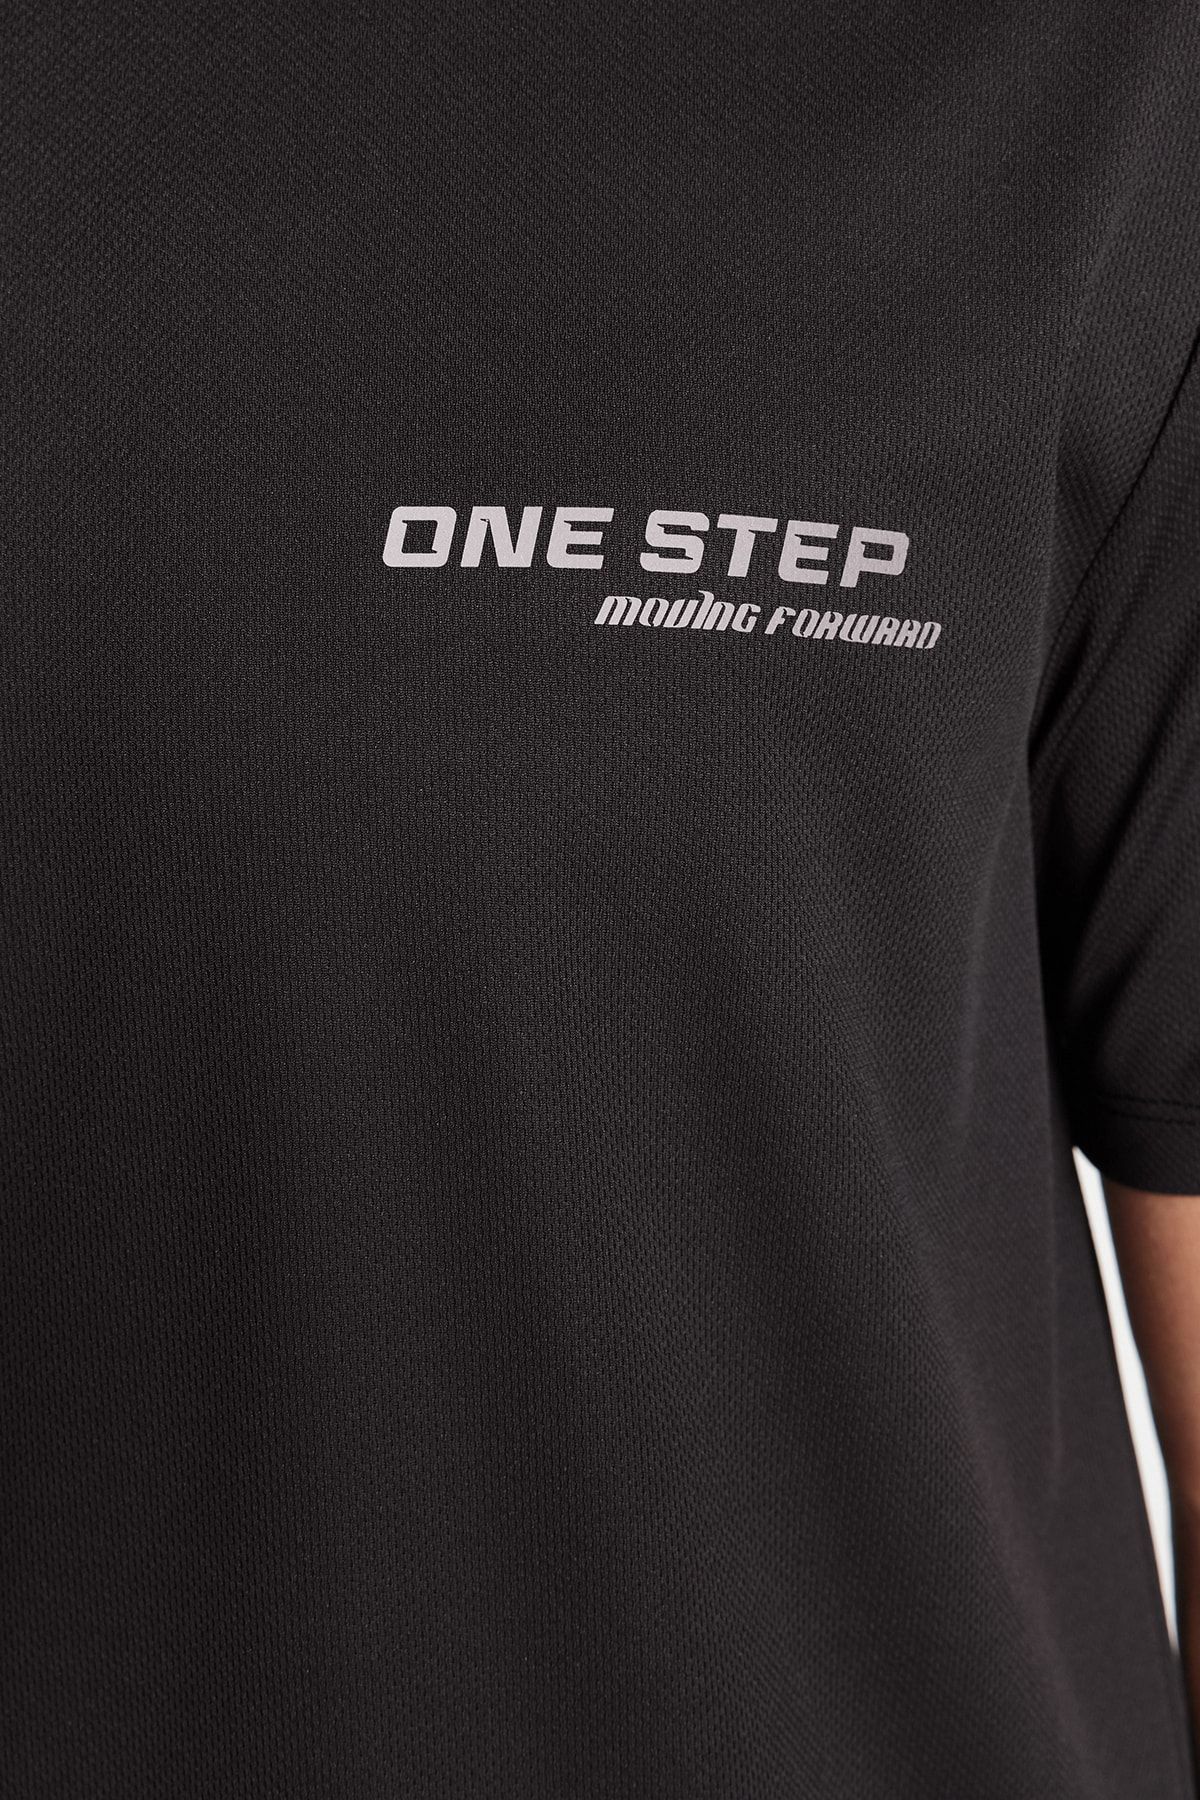 Stylish T-Shirts for Men  Design-Forward - Trendyol